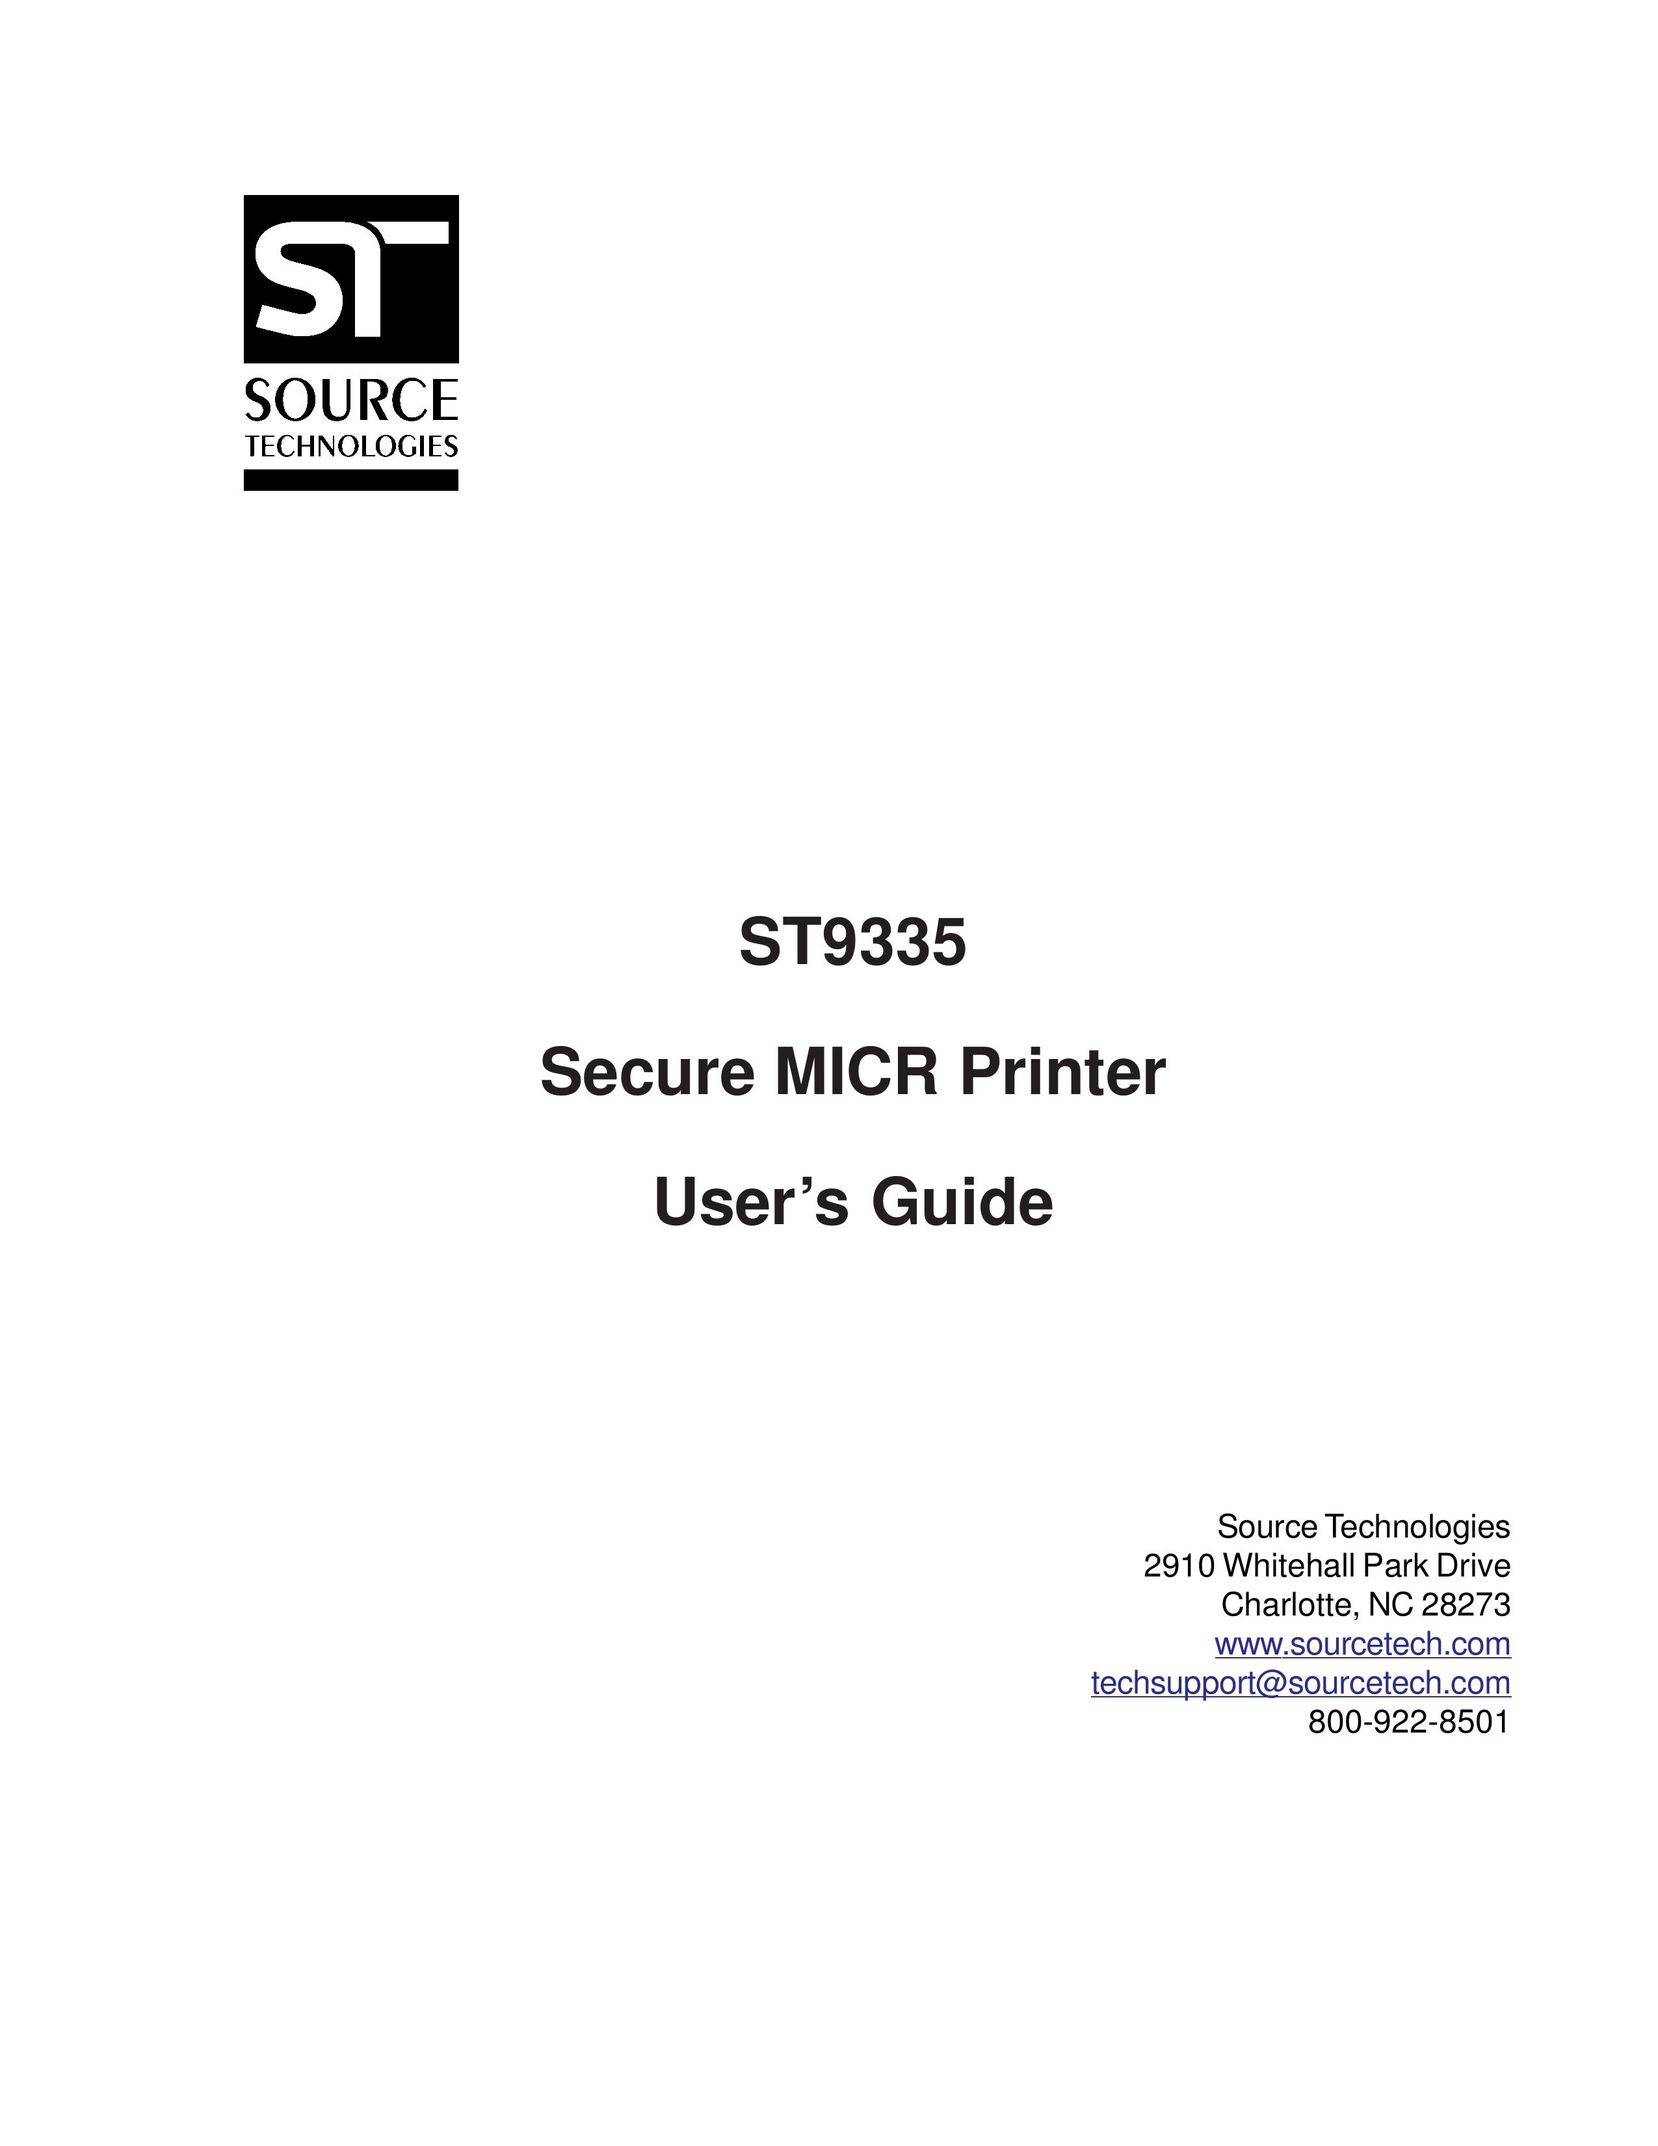 Source Technologies ST9335 Printer User Manual